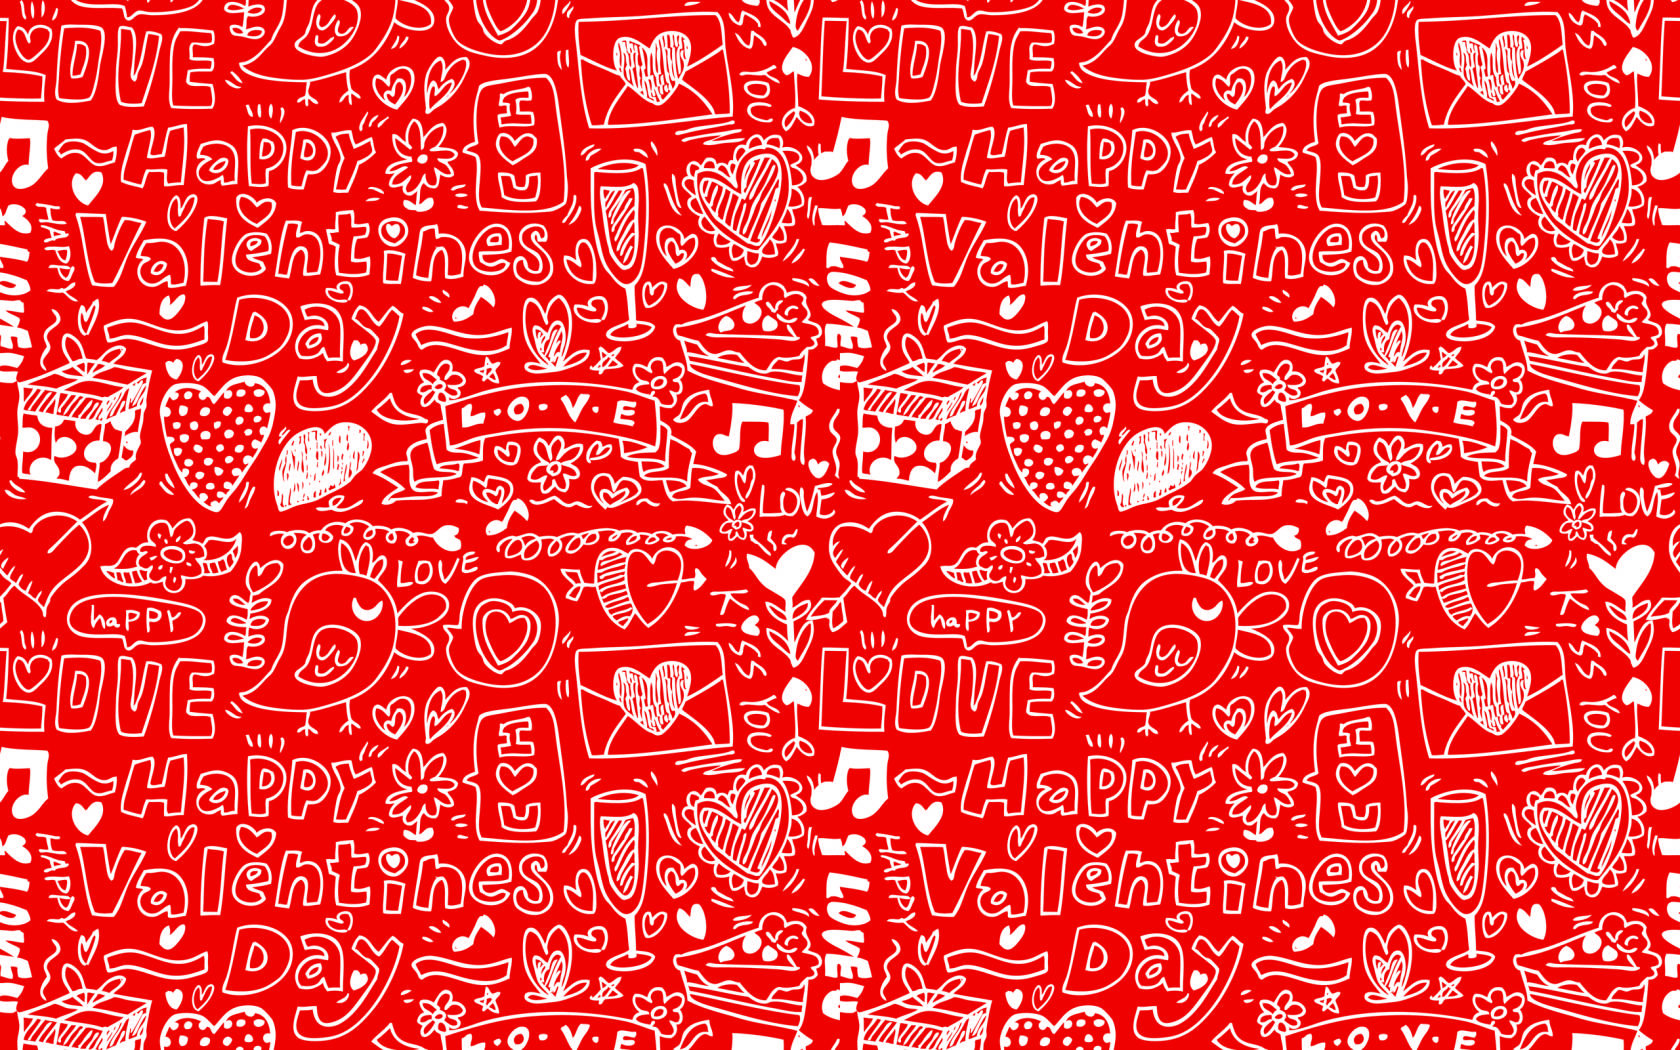 Happy Valentine&;s Day widescreen wallpaper. Wide